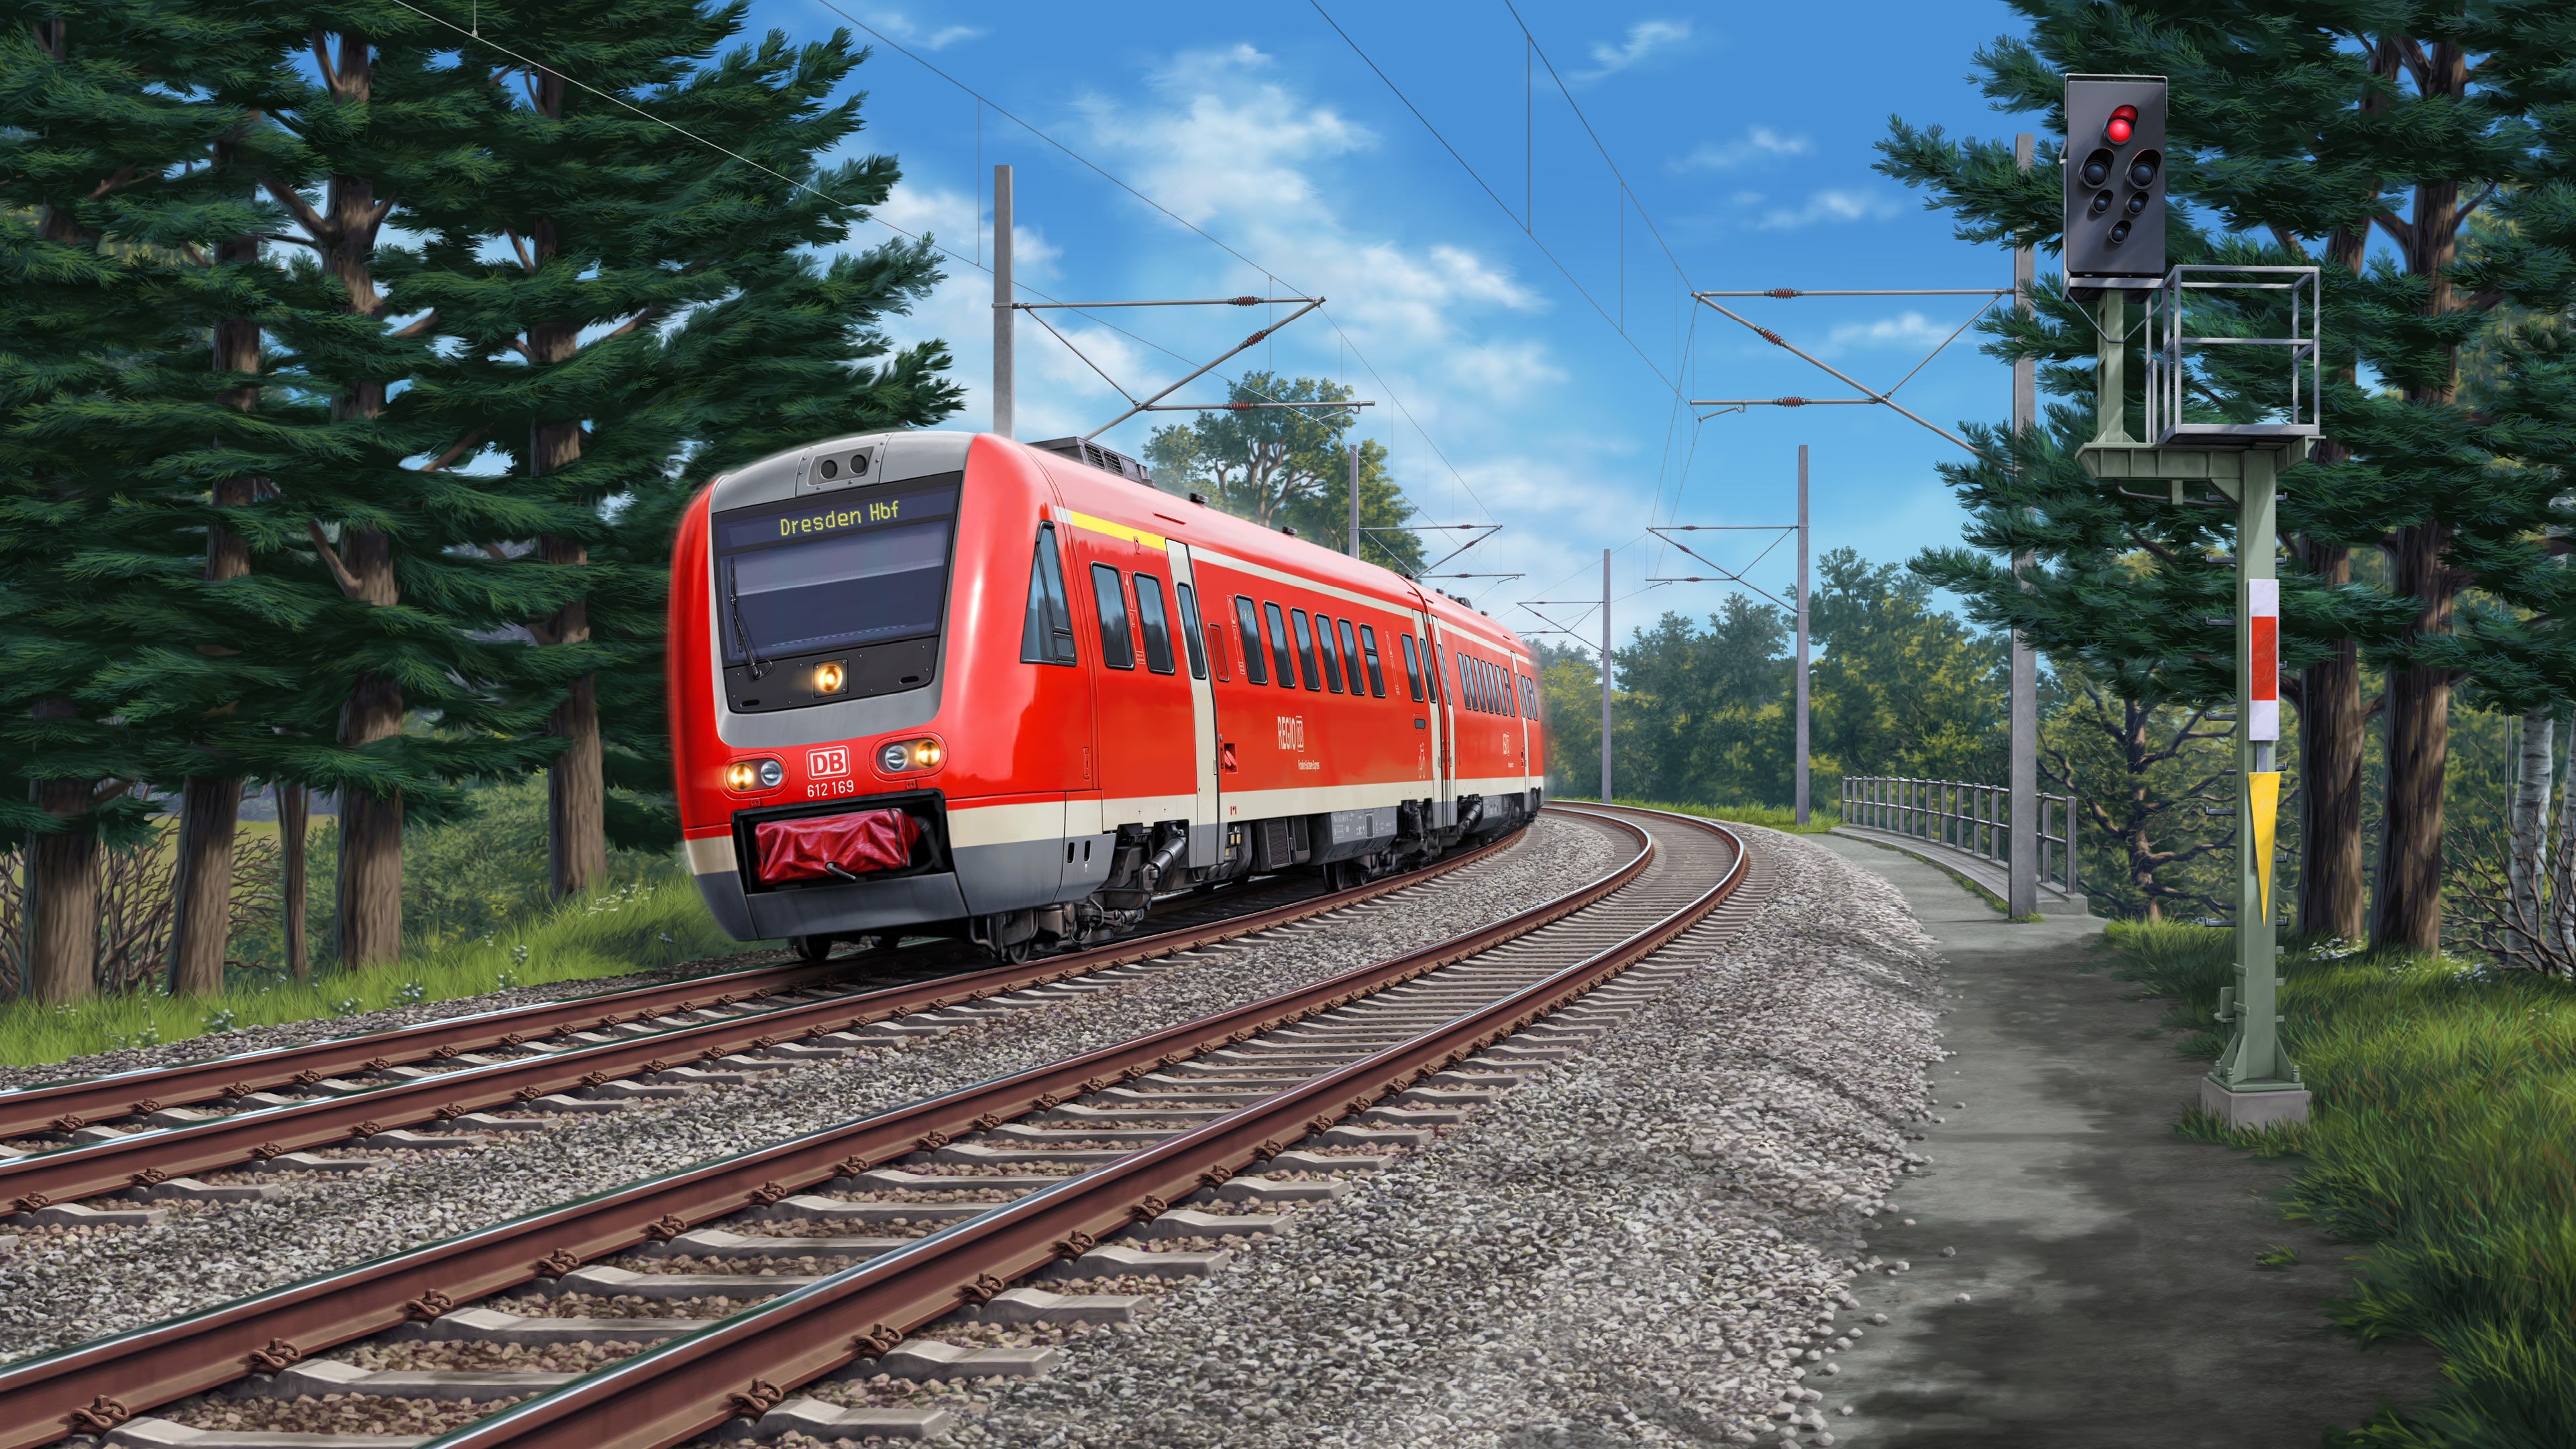 Train Sim World® 2: Tharandter Rampe: Dresden - Chemnitz